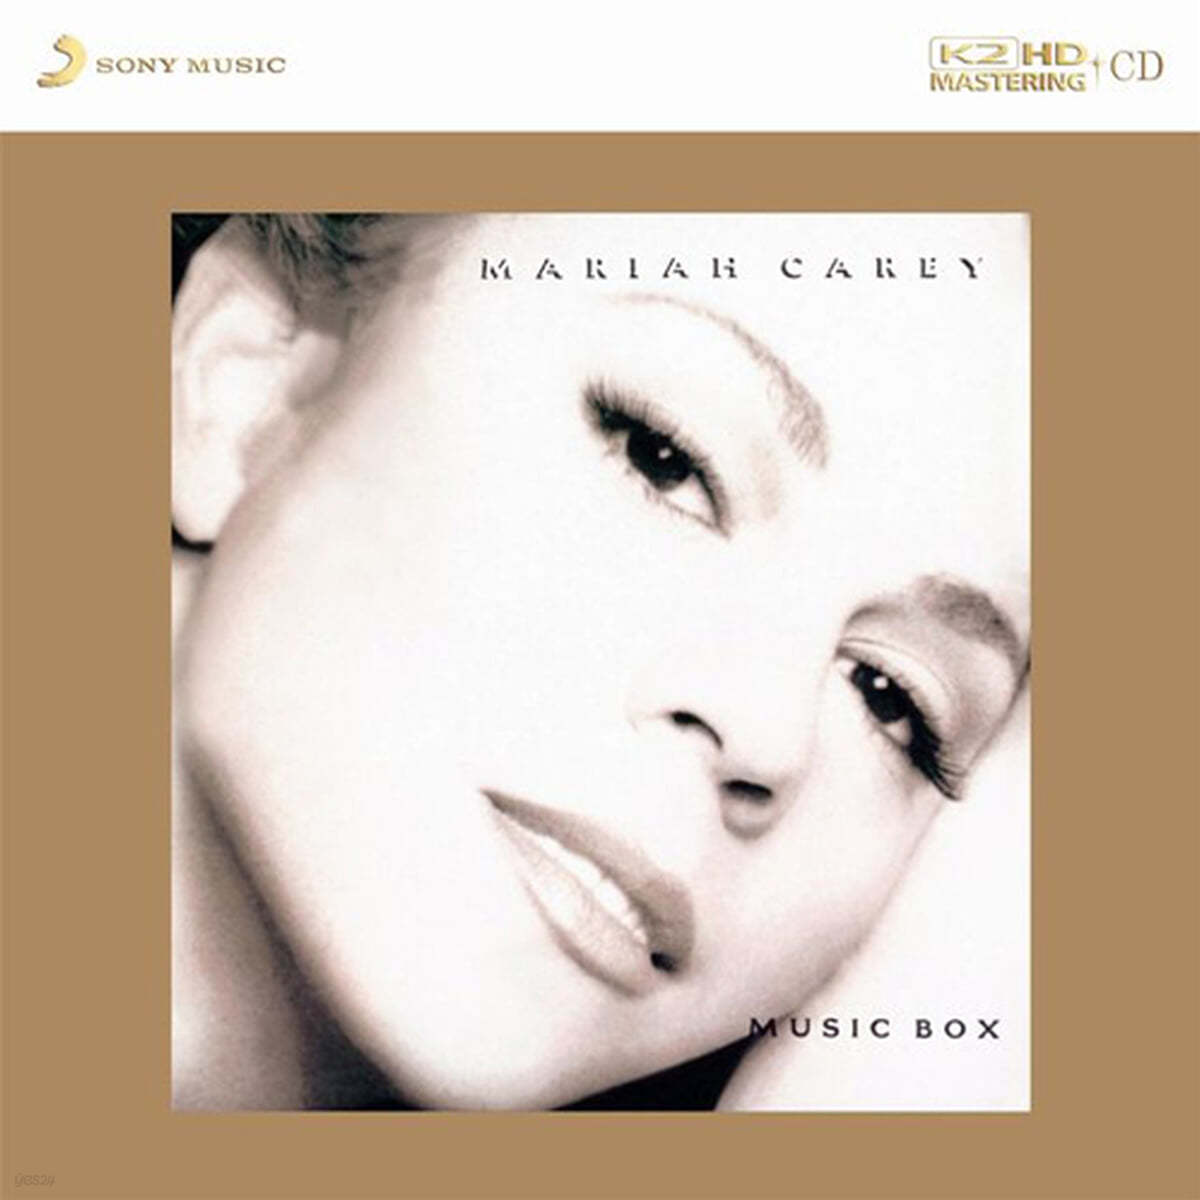 Mariah Carey (머라이어 캐리) - 3집 Music Box [K2HD]